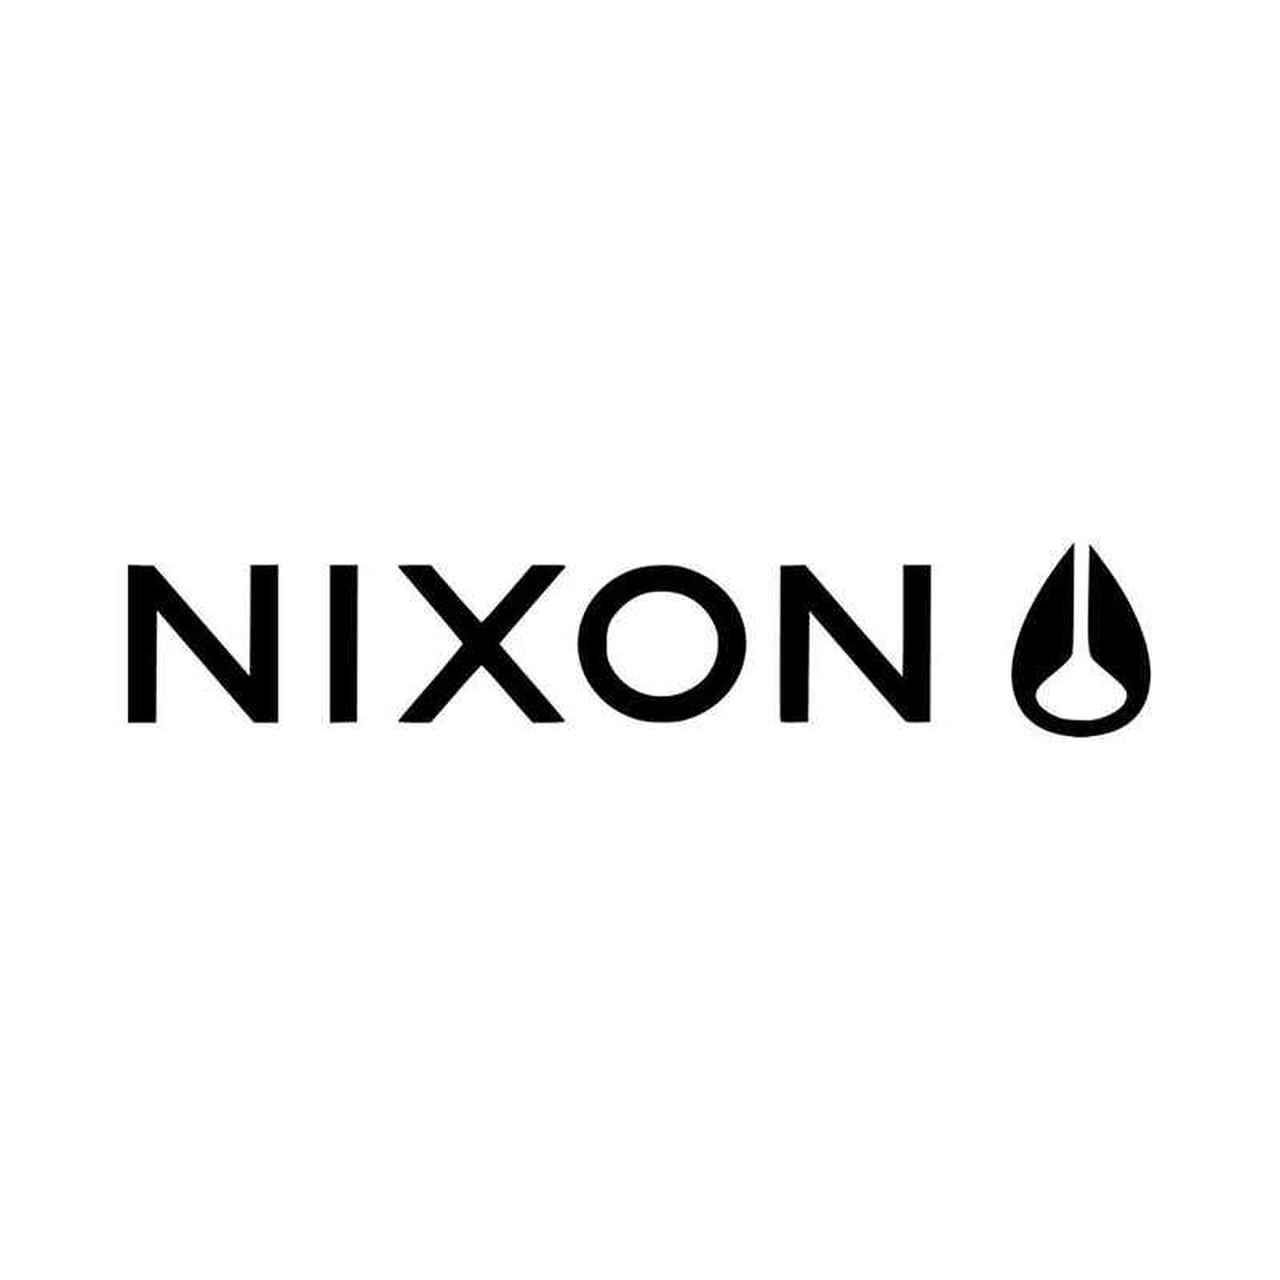 Nixon Coupons & Promo Codes